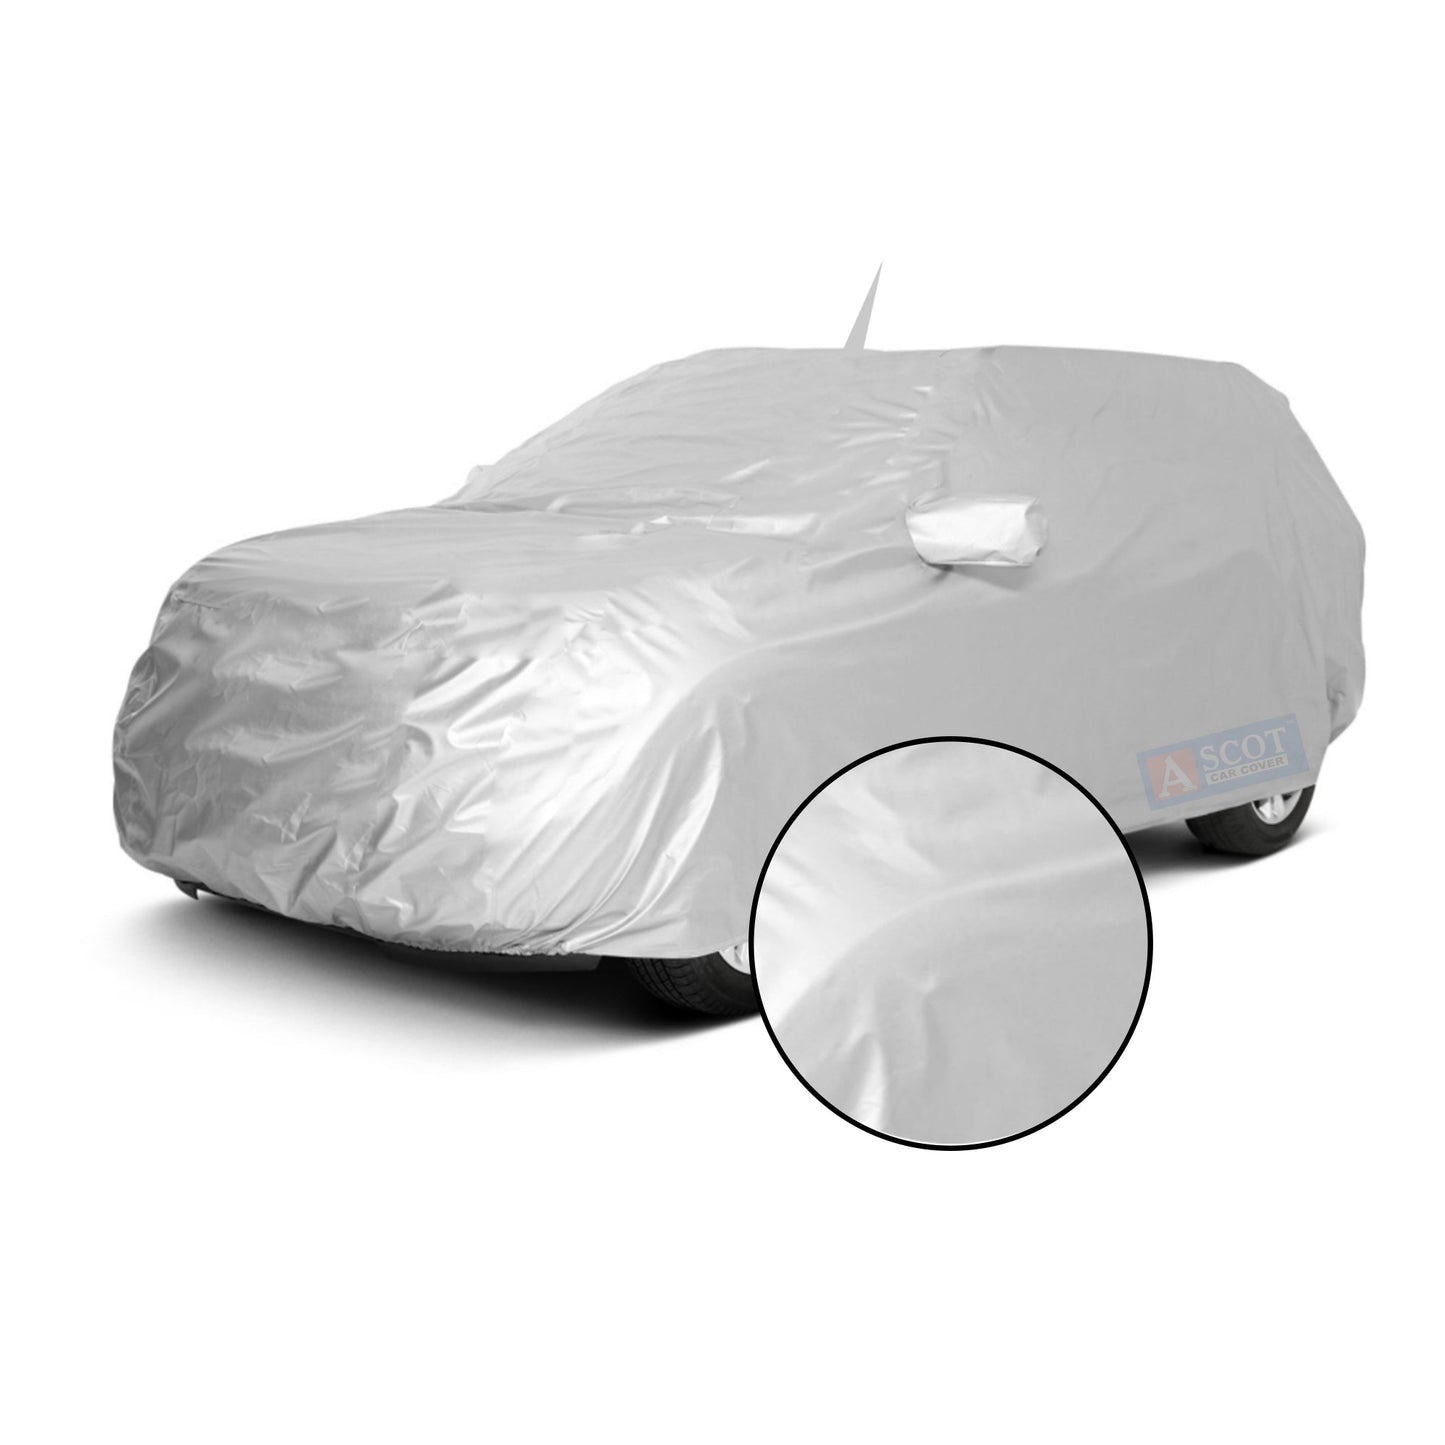 Ascot Honda Civic 2019-2023 Model Car Body Cover Dust Proof, Trippel Stitched